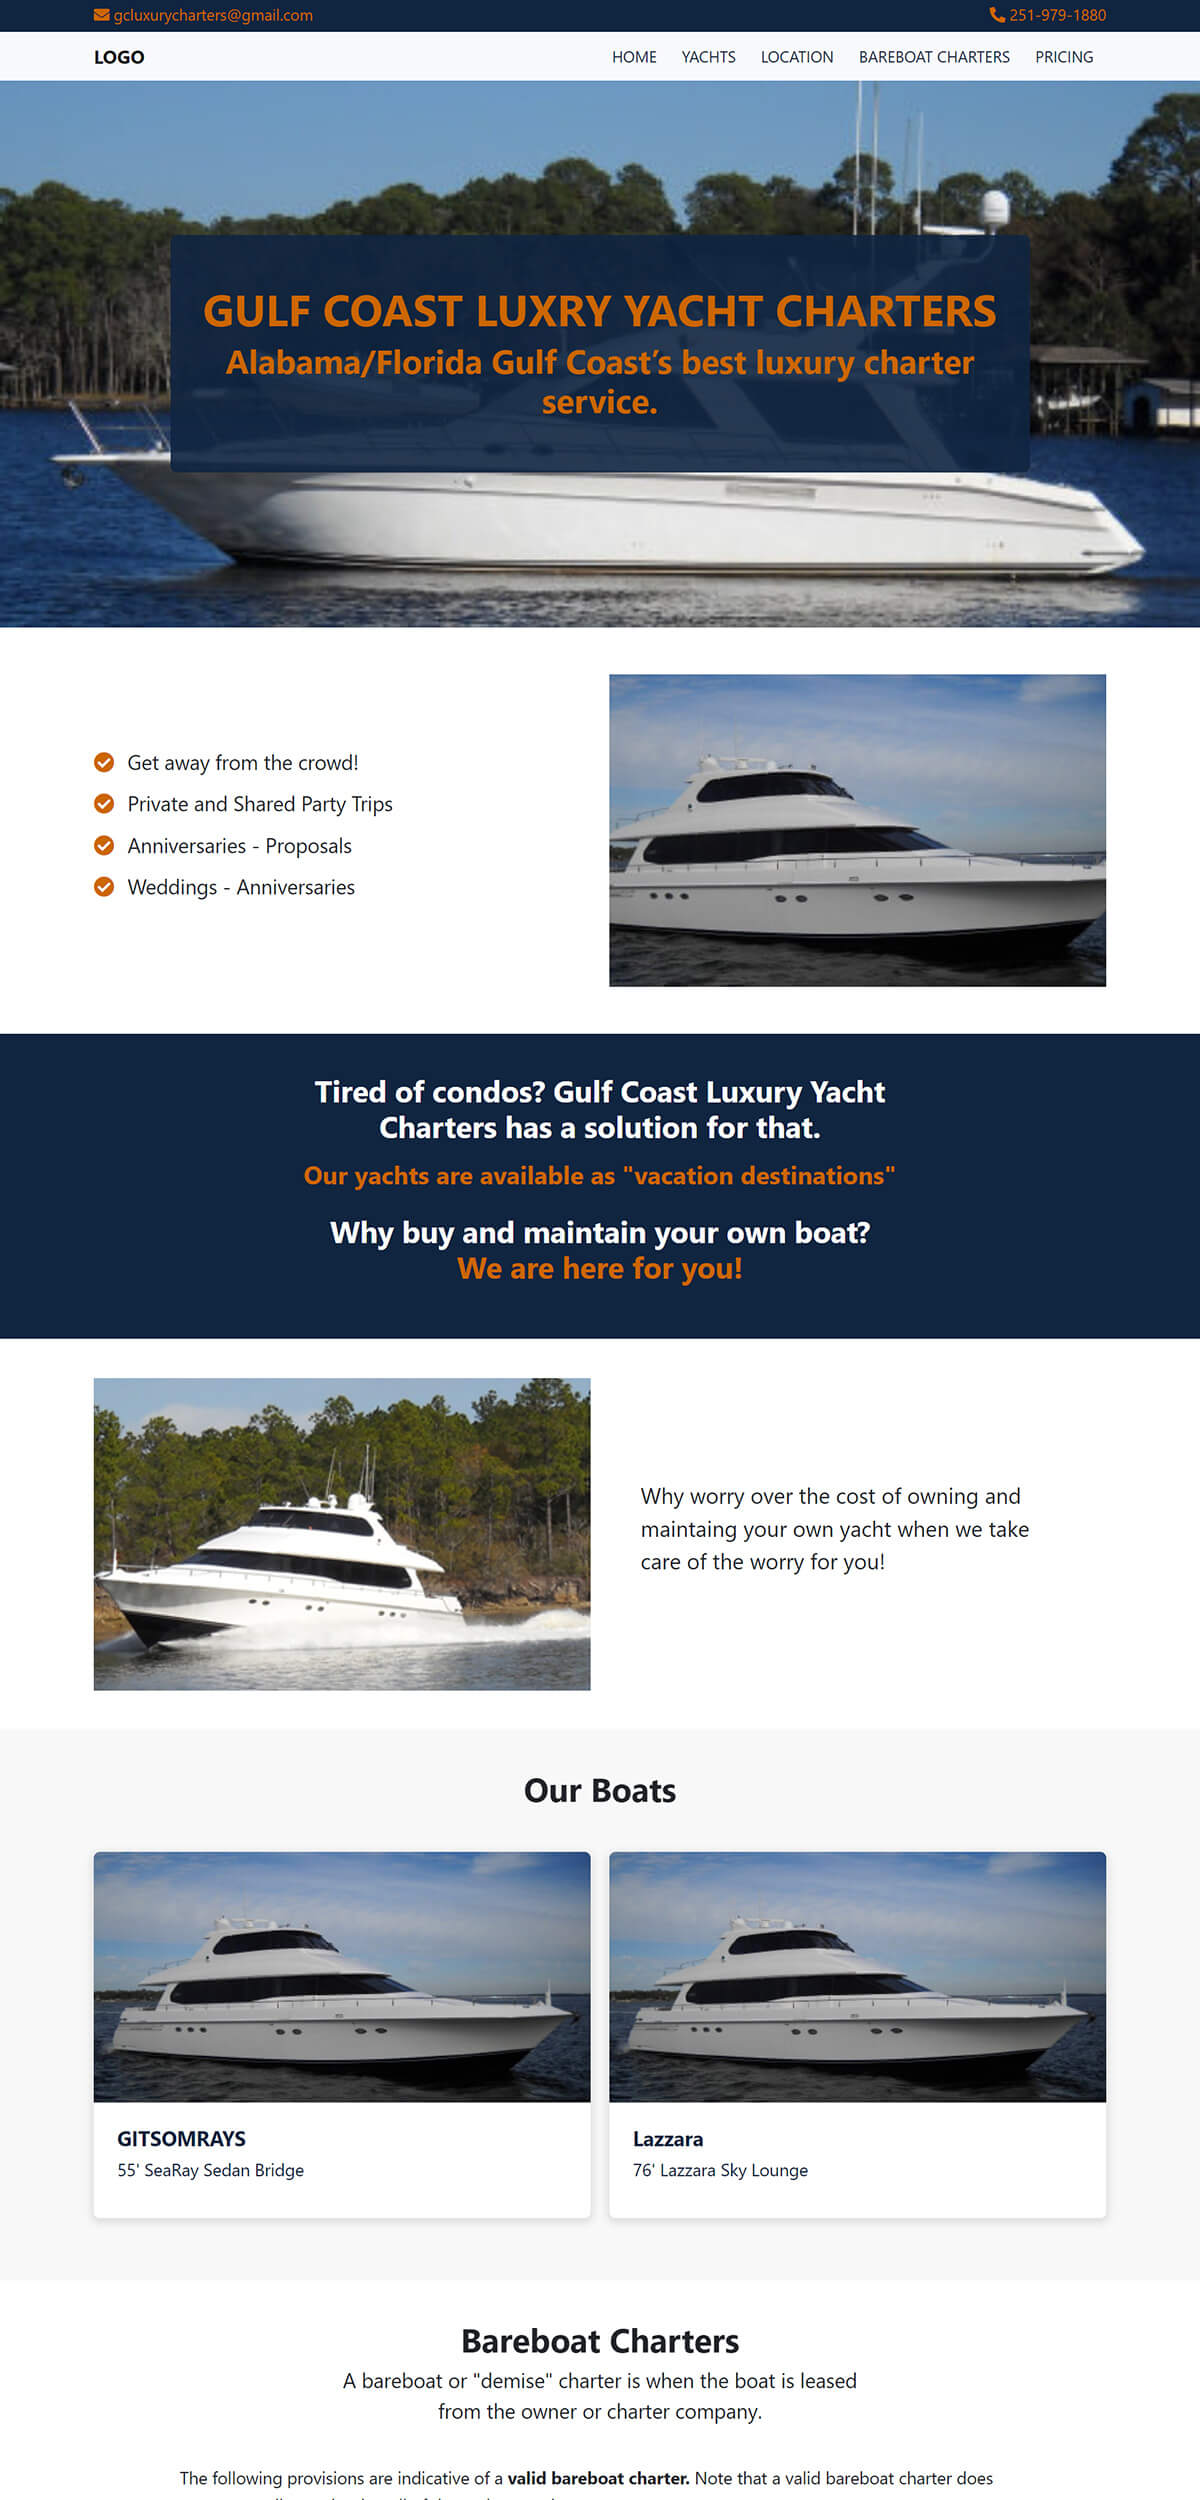 Gulf Cost Luxury website designed by Digital DL Marketing